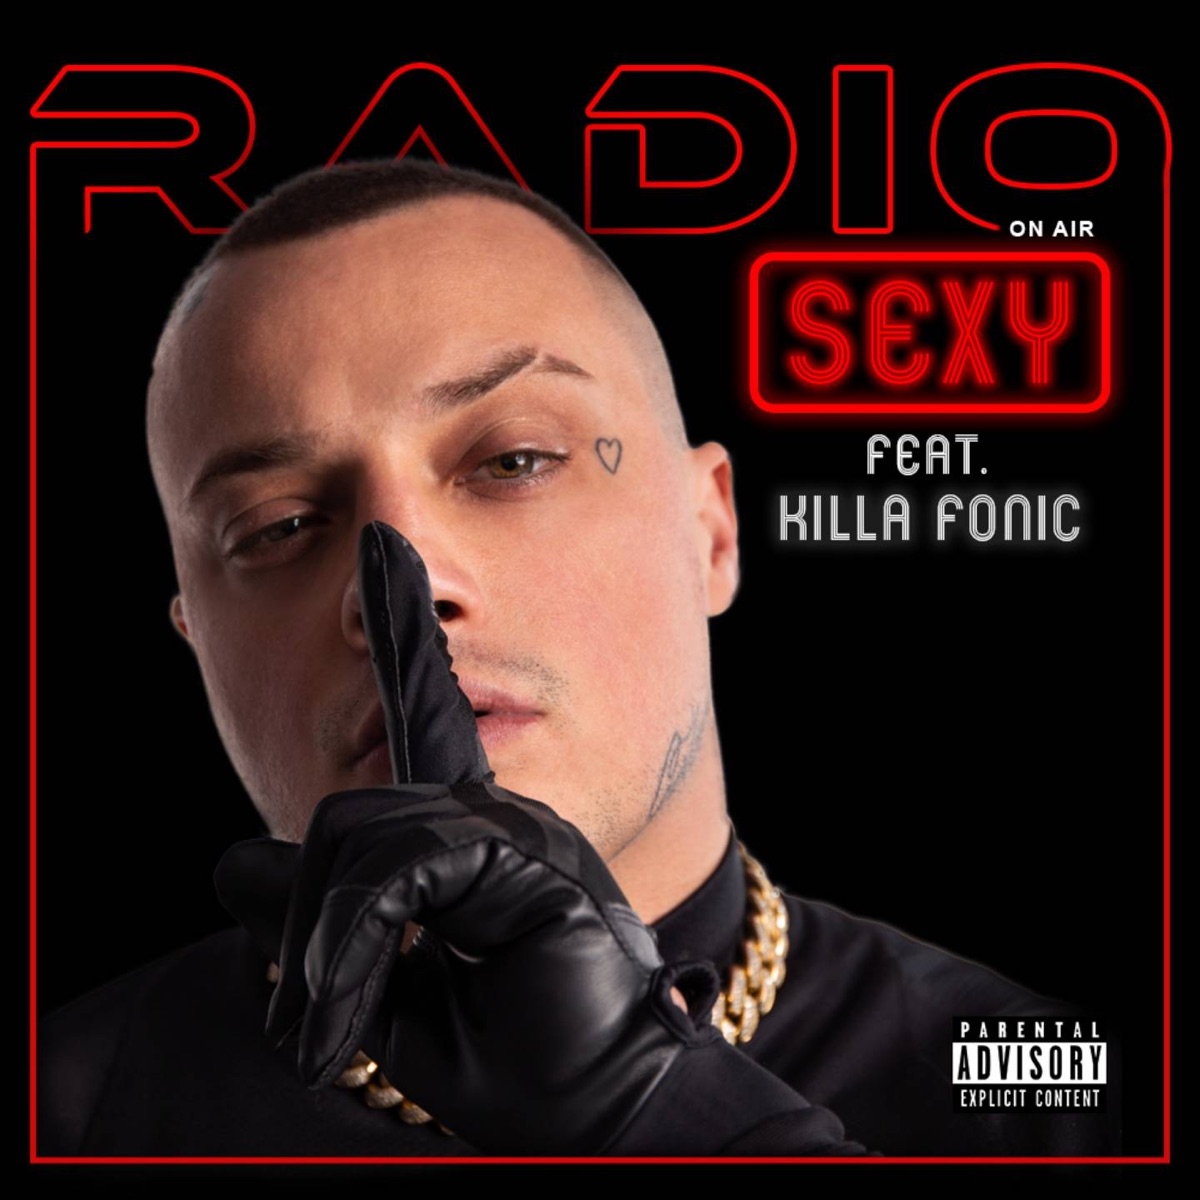 Radio Sexy - Single - Album by OG Eastbull & Killa Fonic - Apple Music